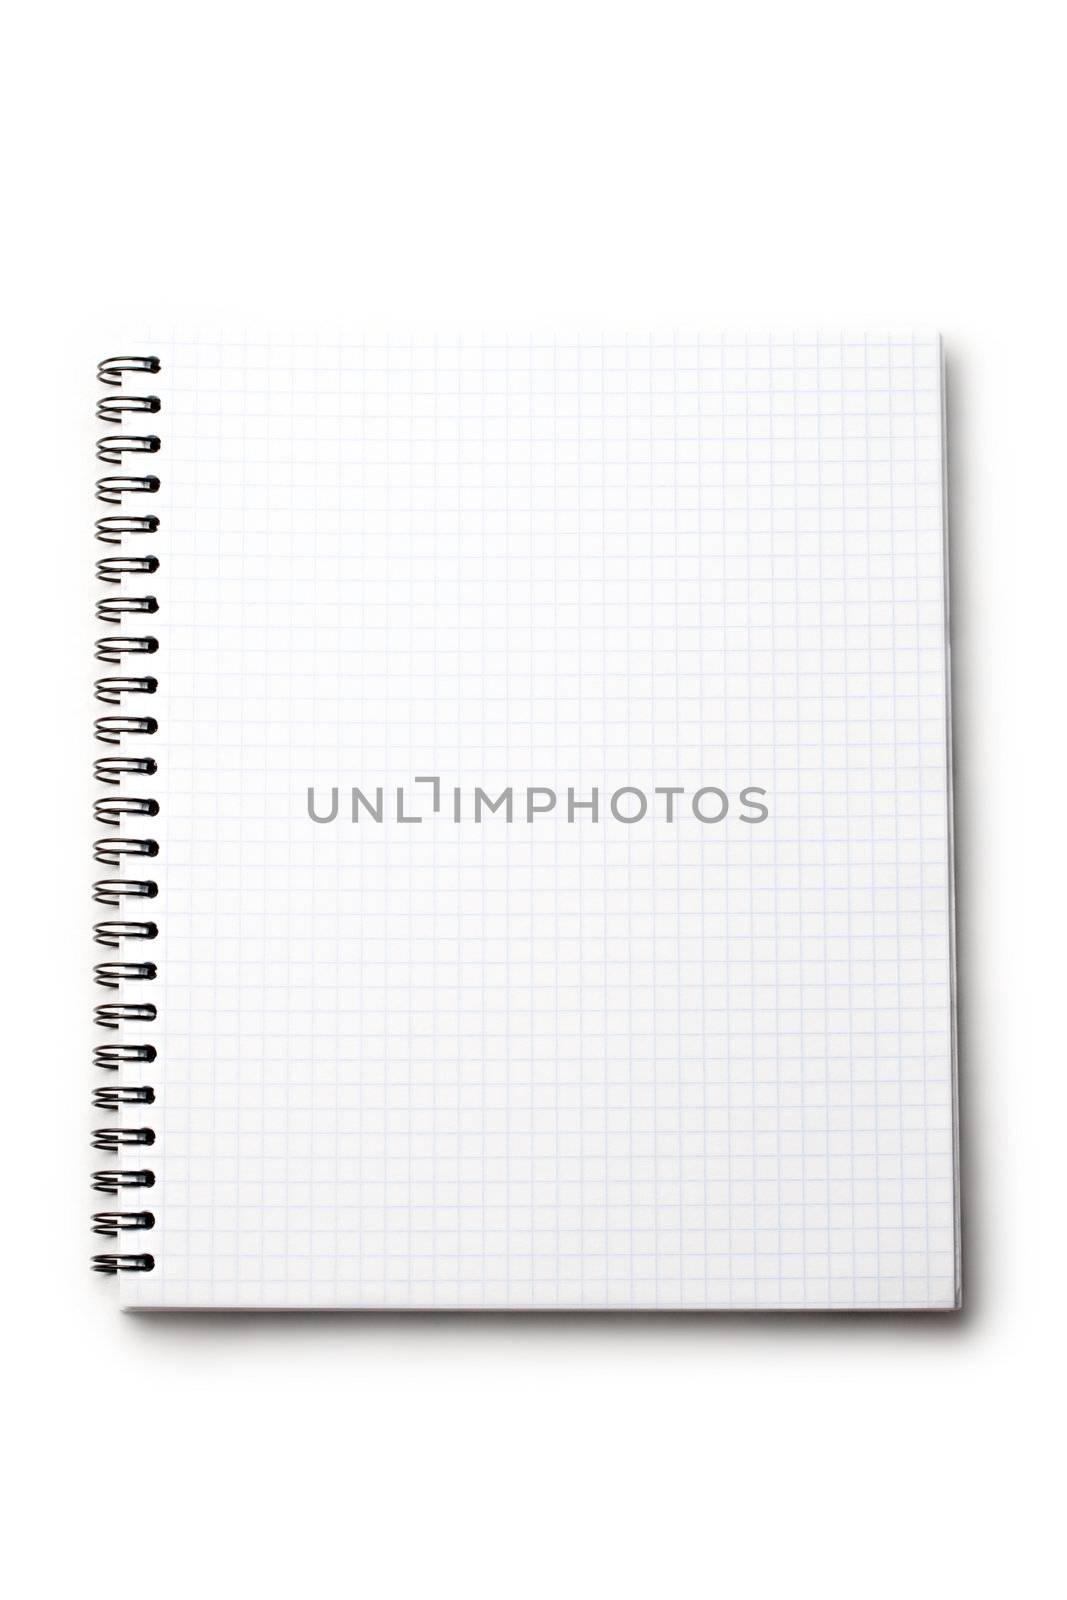 Notepad isolated on white by Garsya